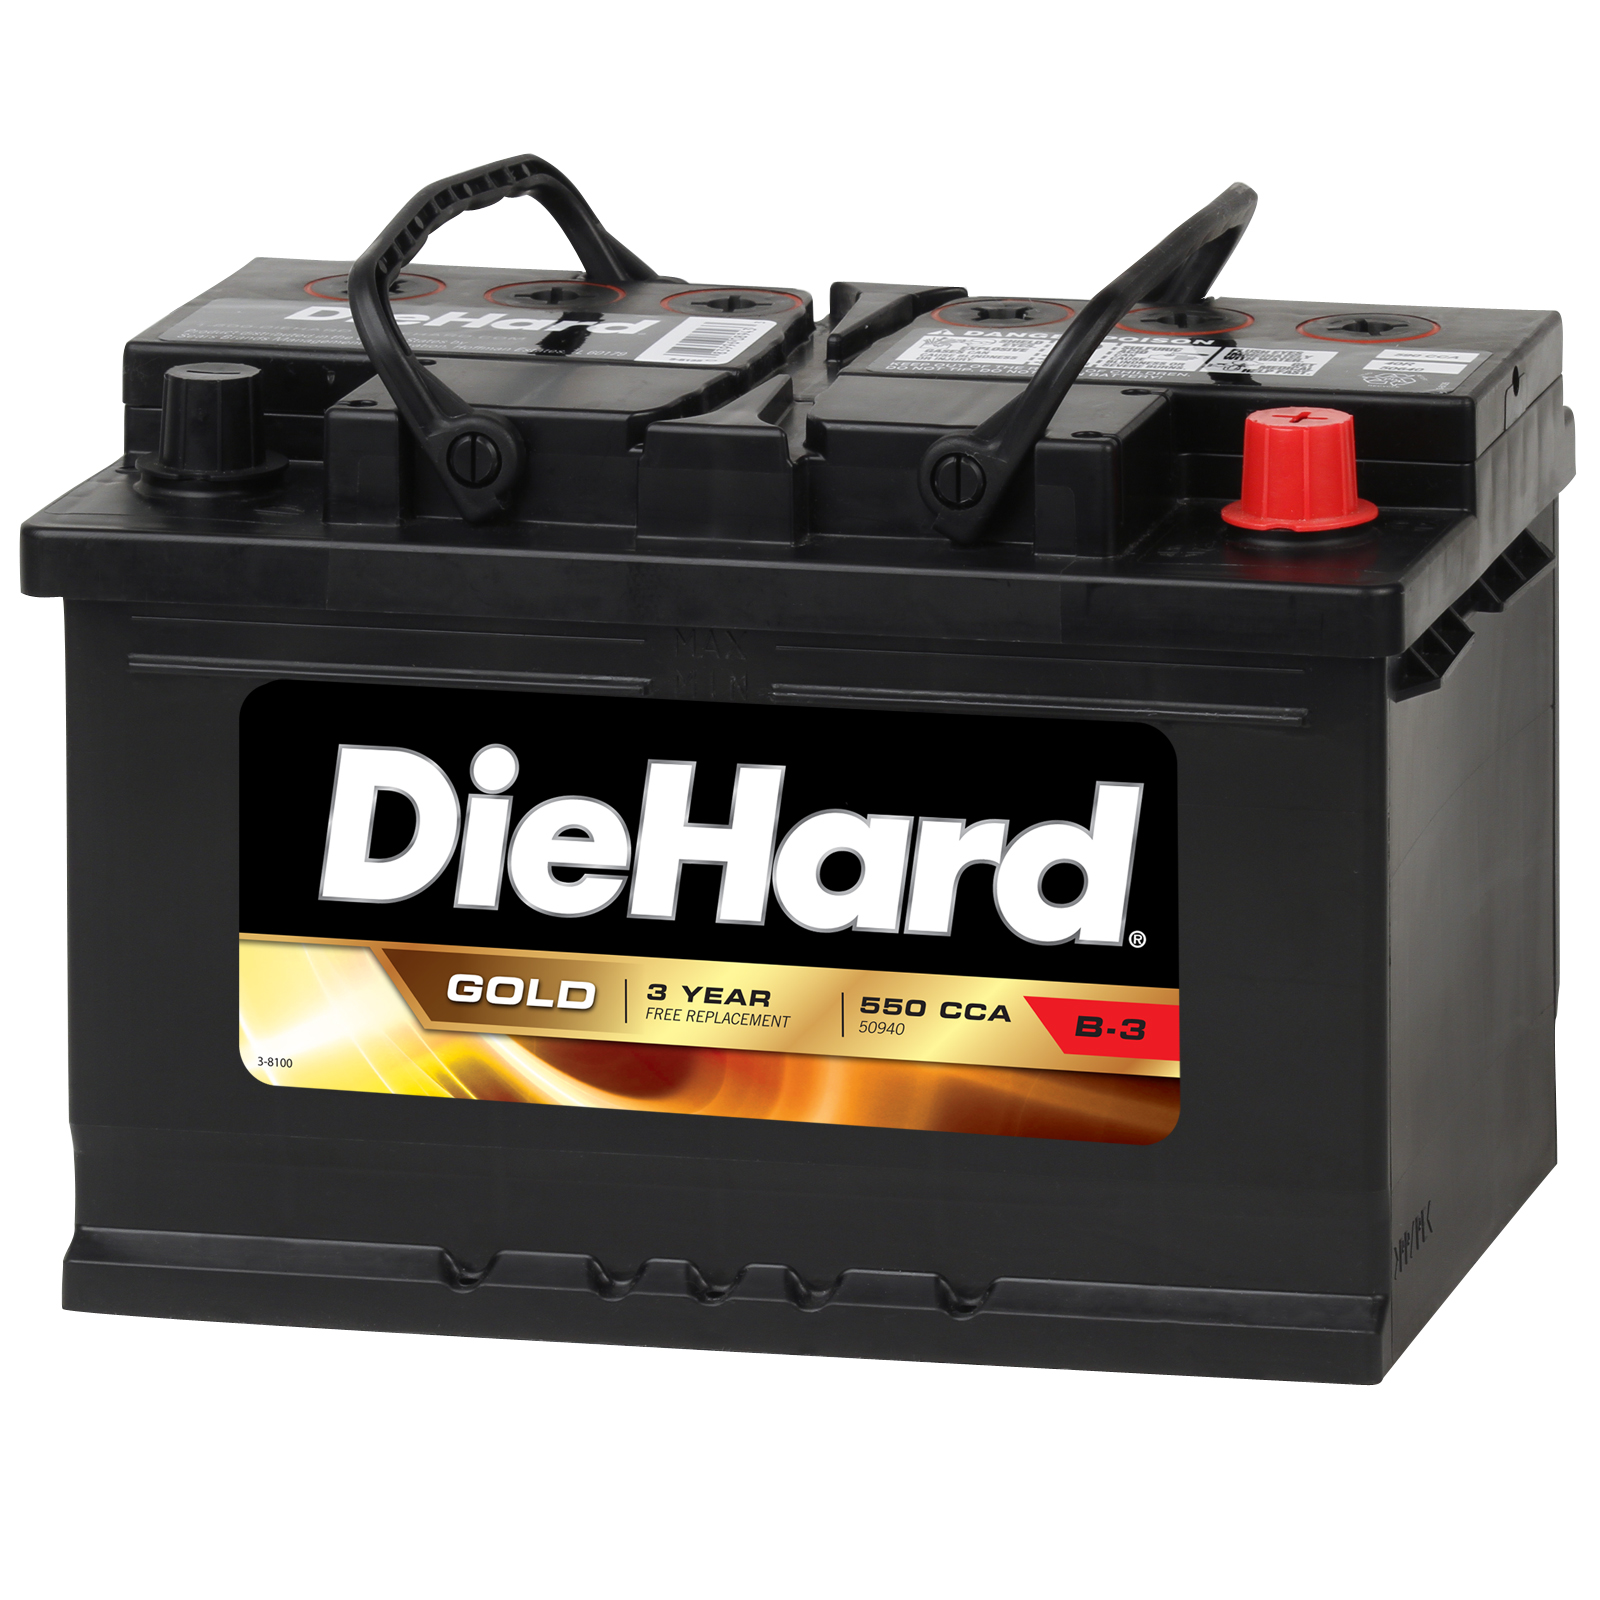 DieHard Gold Automotive Battery 50940 - Group Size EP-40R